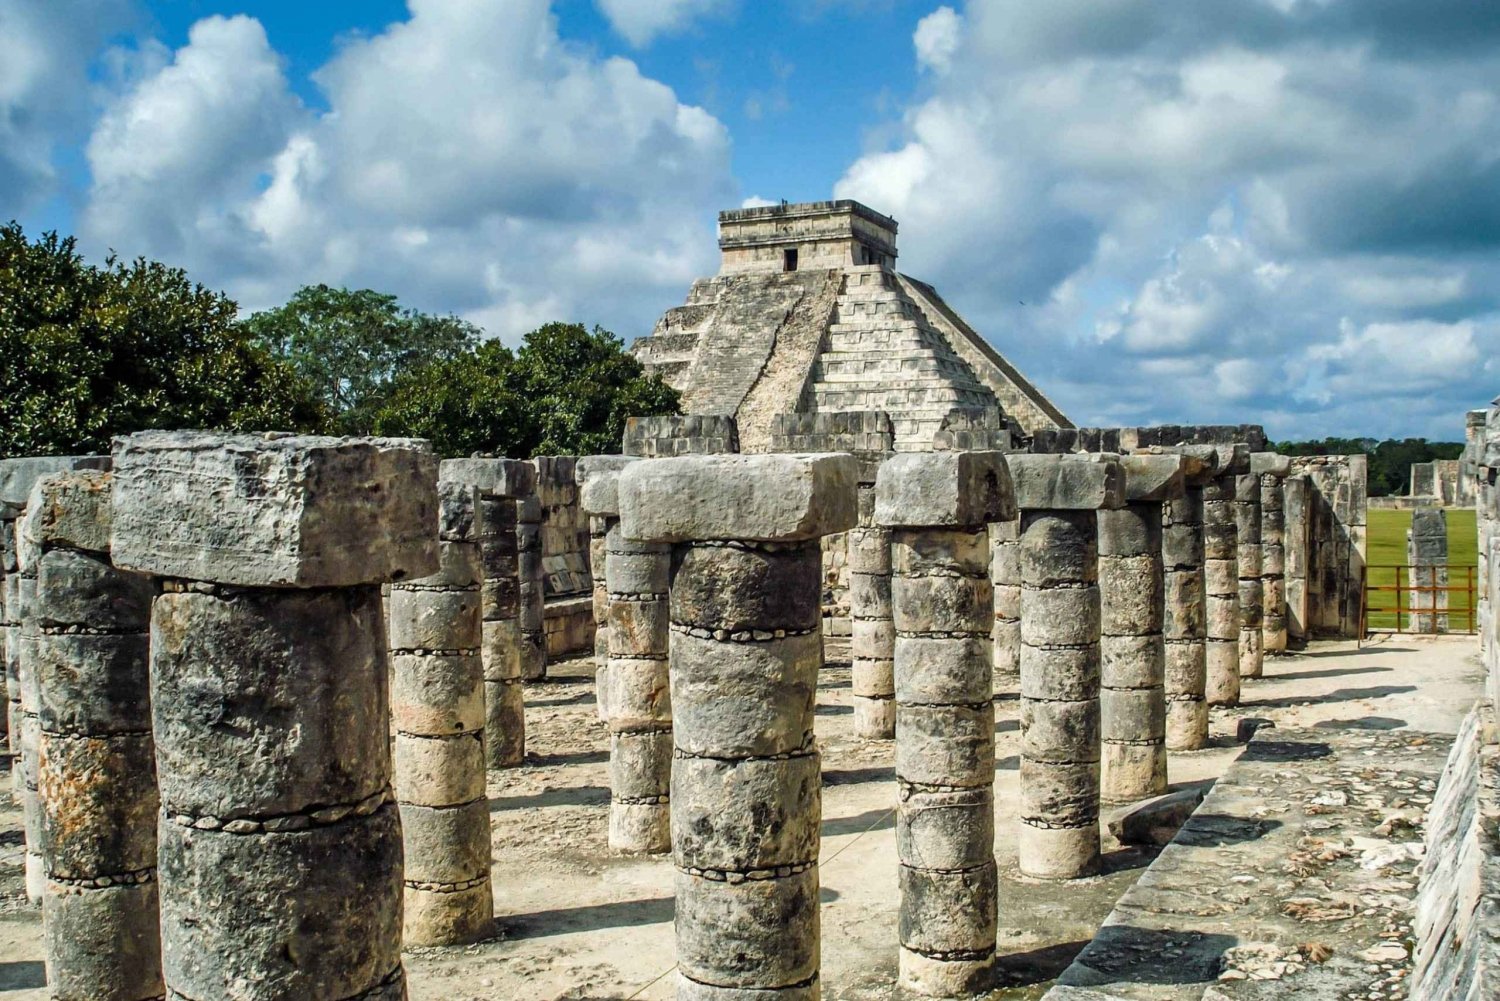 Chichén Itzá: Skip-the-Line Entrance Ticket